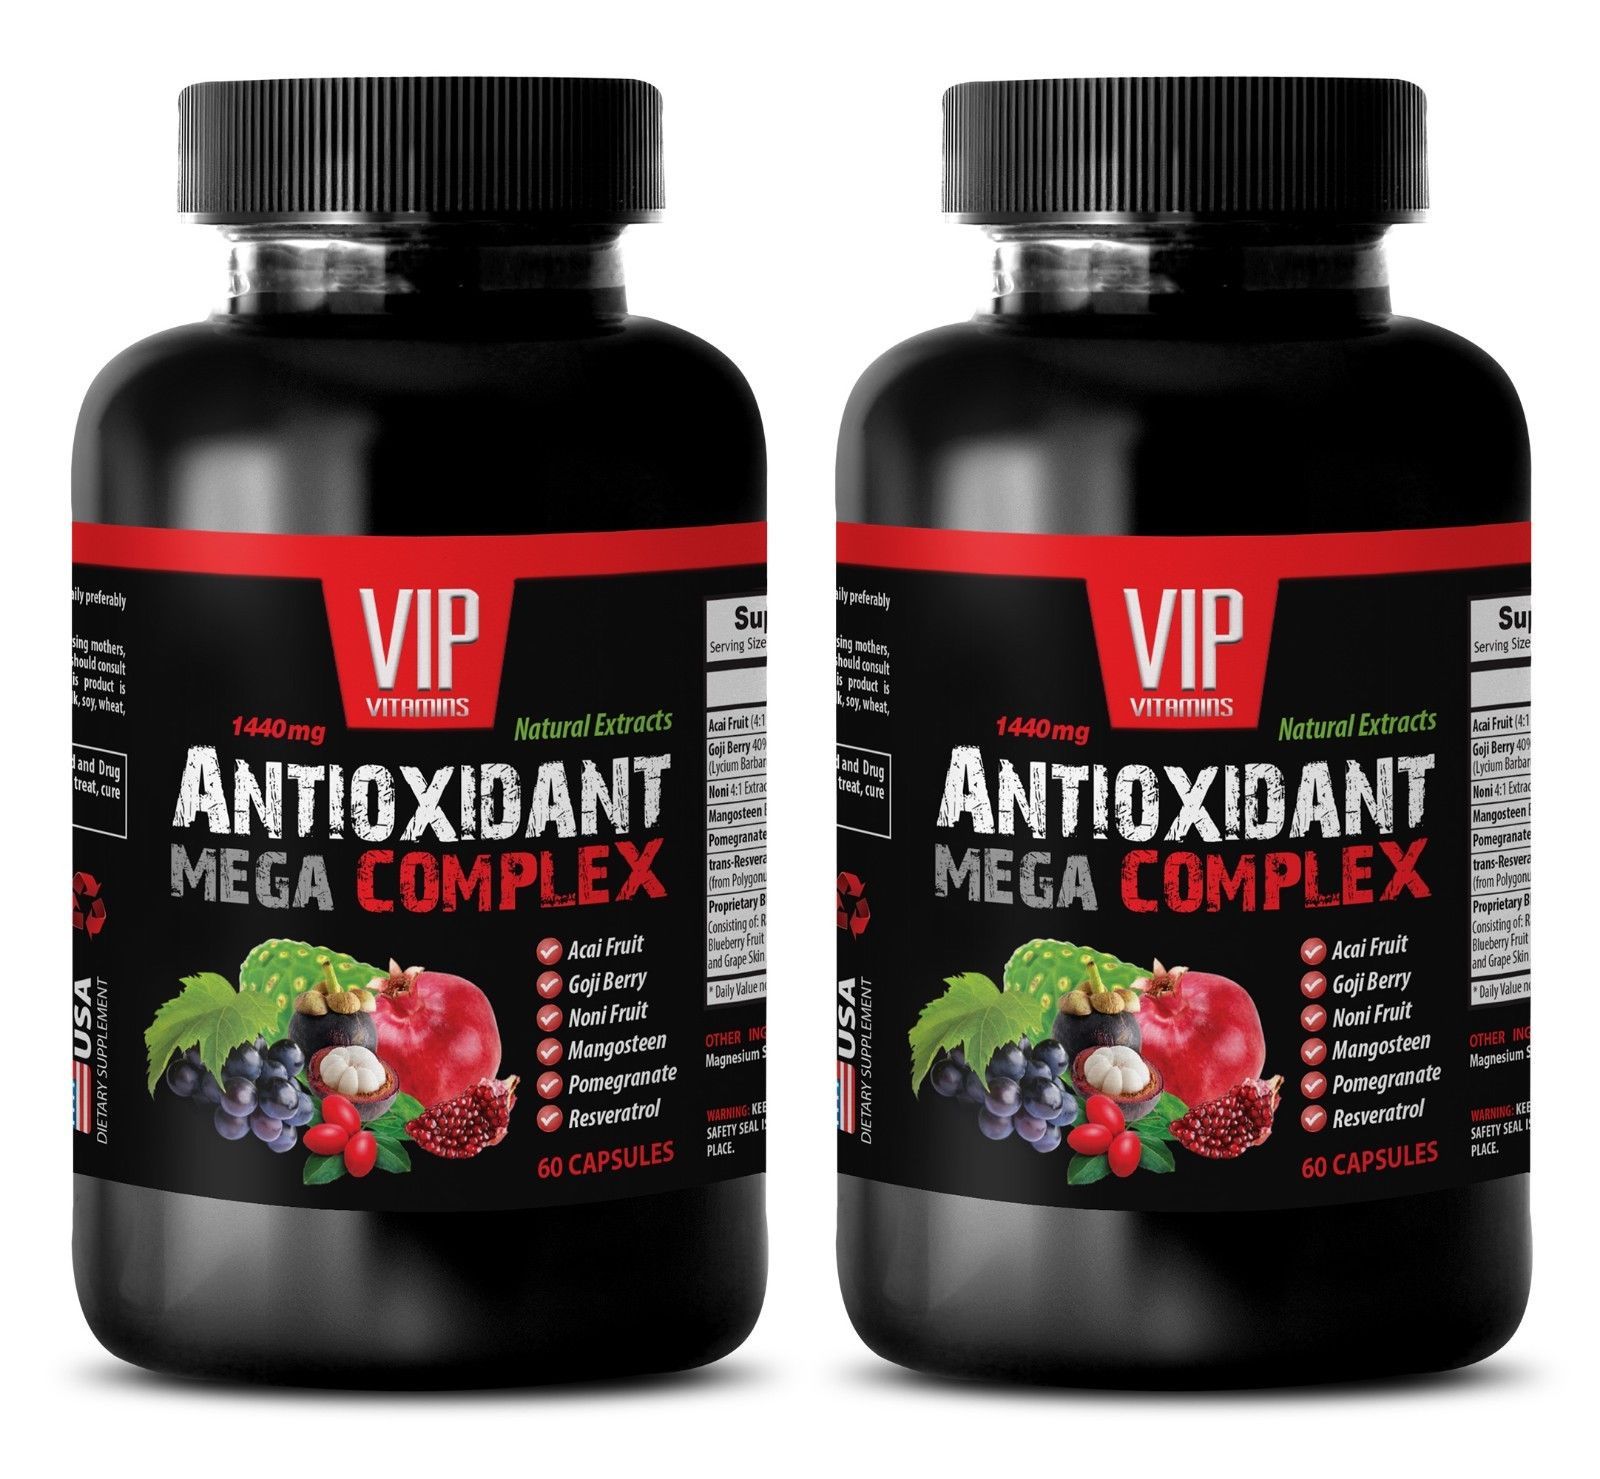 Antioxidant extreme - ANTIOXIDANT MEGA COMPLEX 2B - Acai antioxidant - $24.27